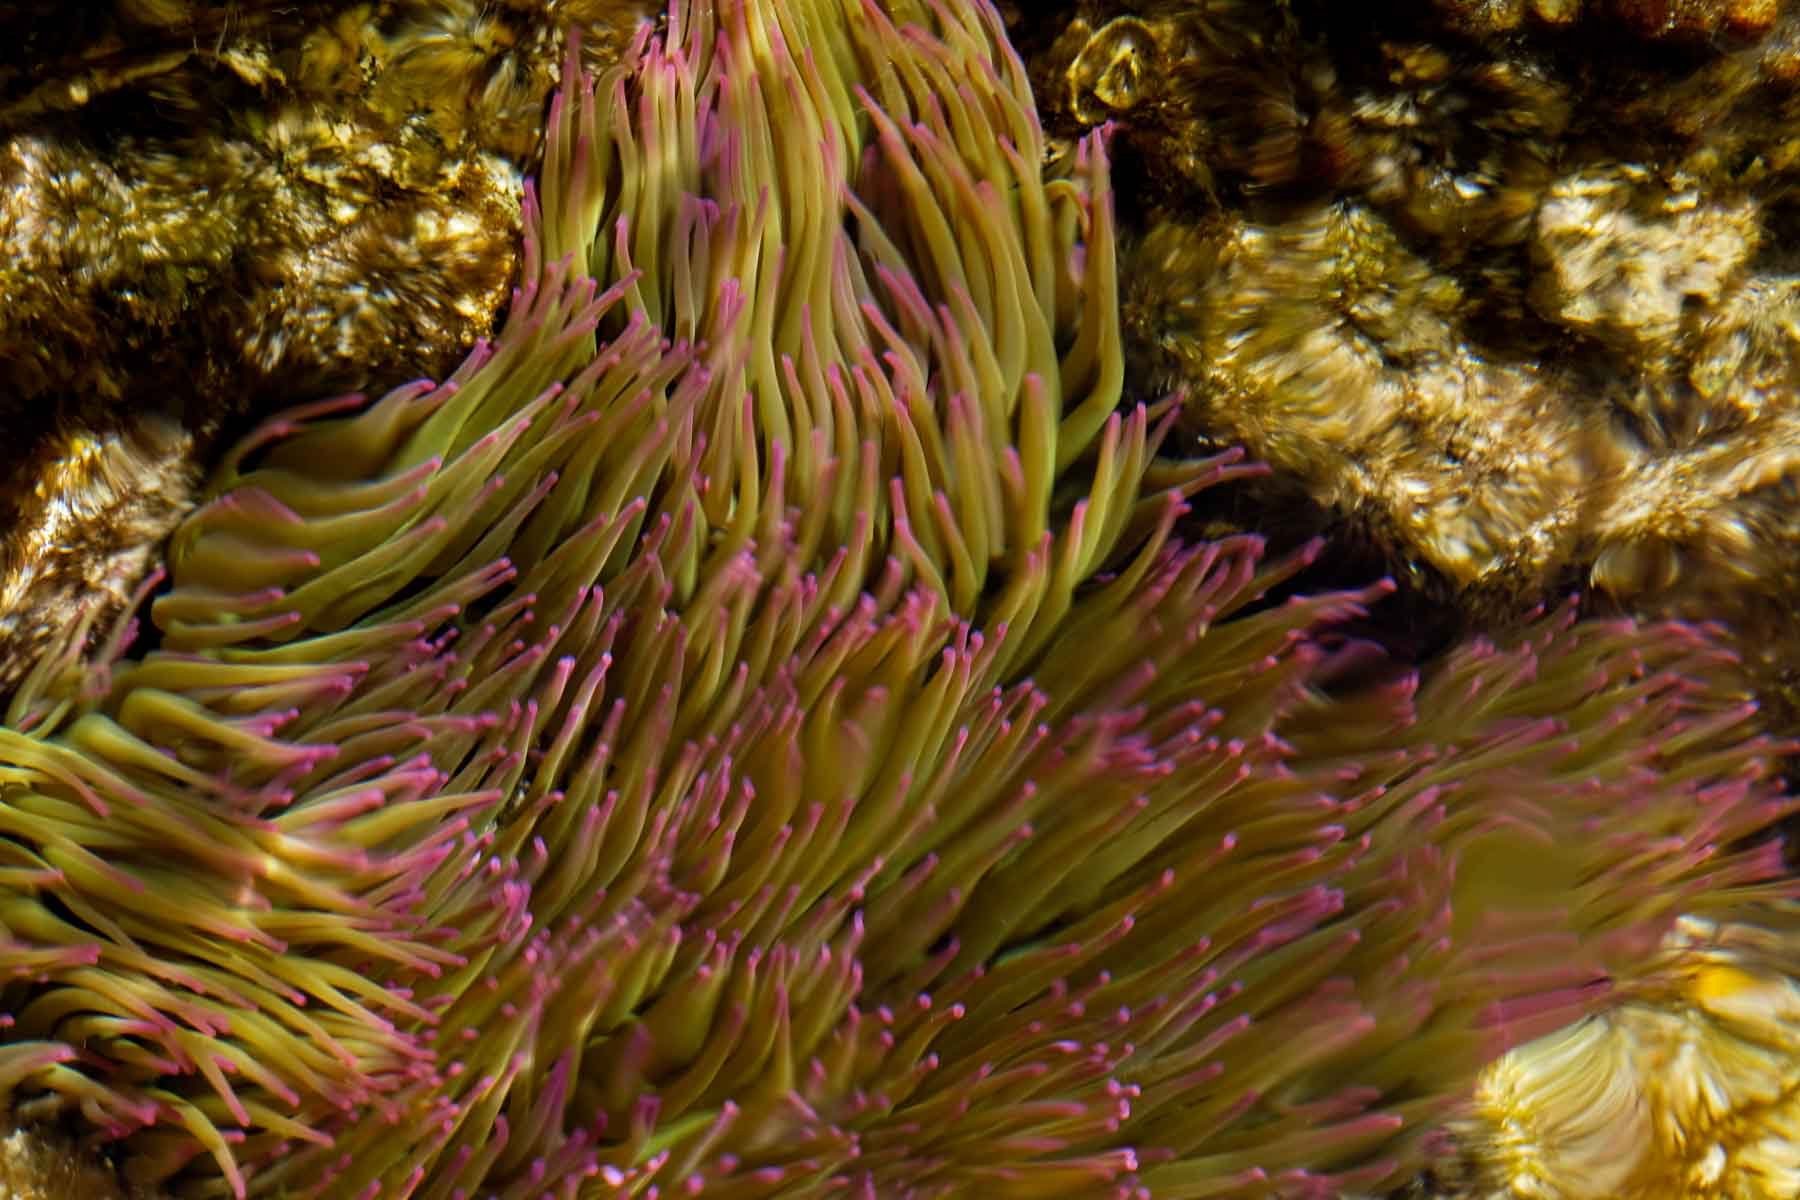  Sea anemone 